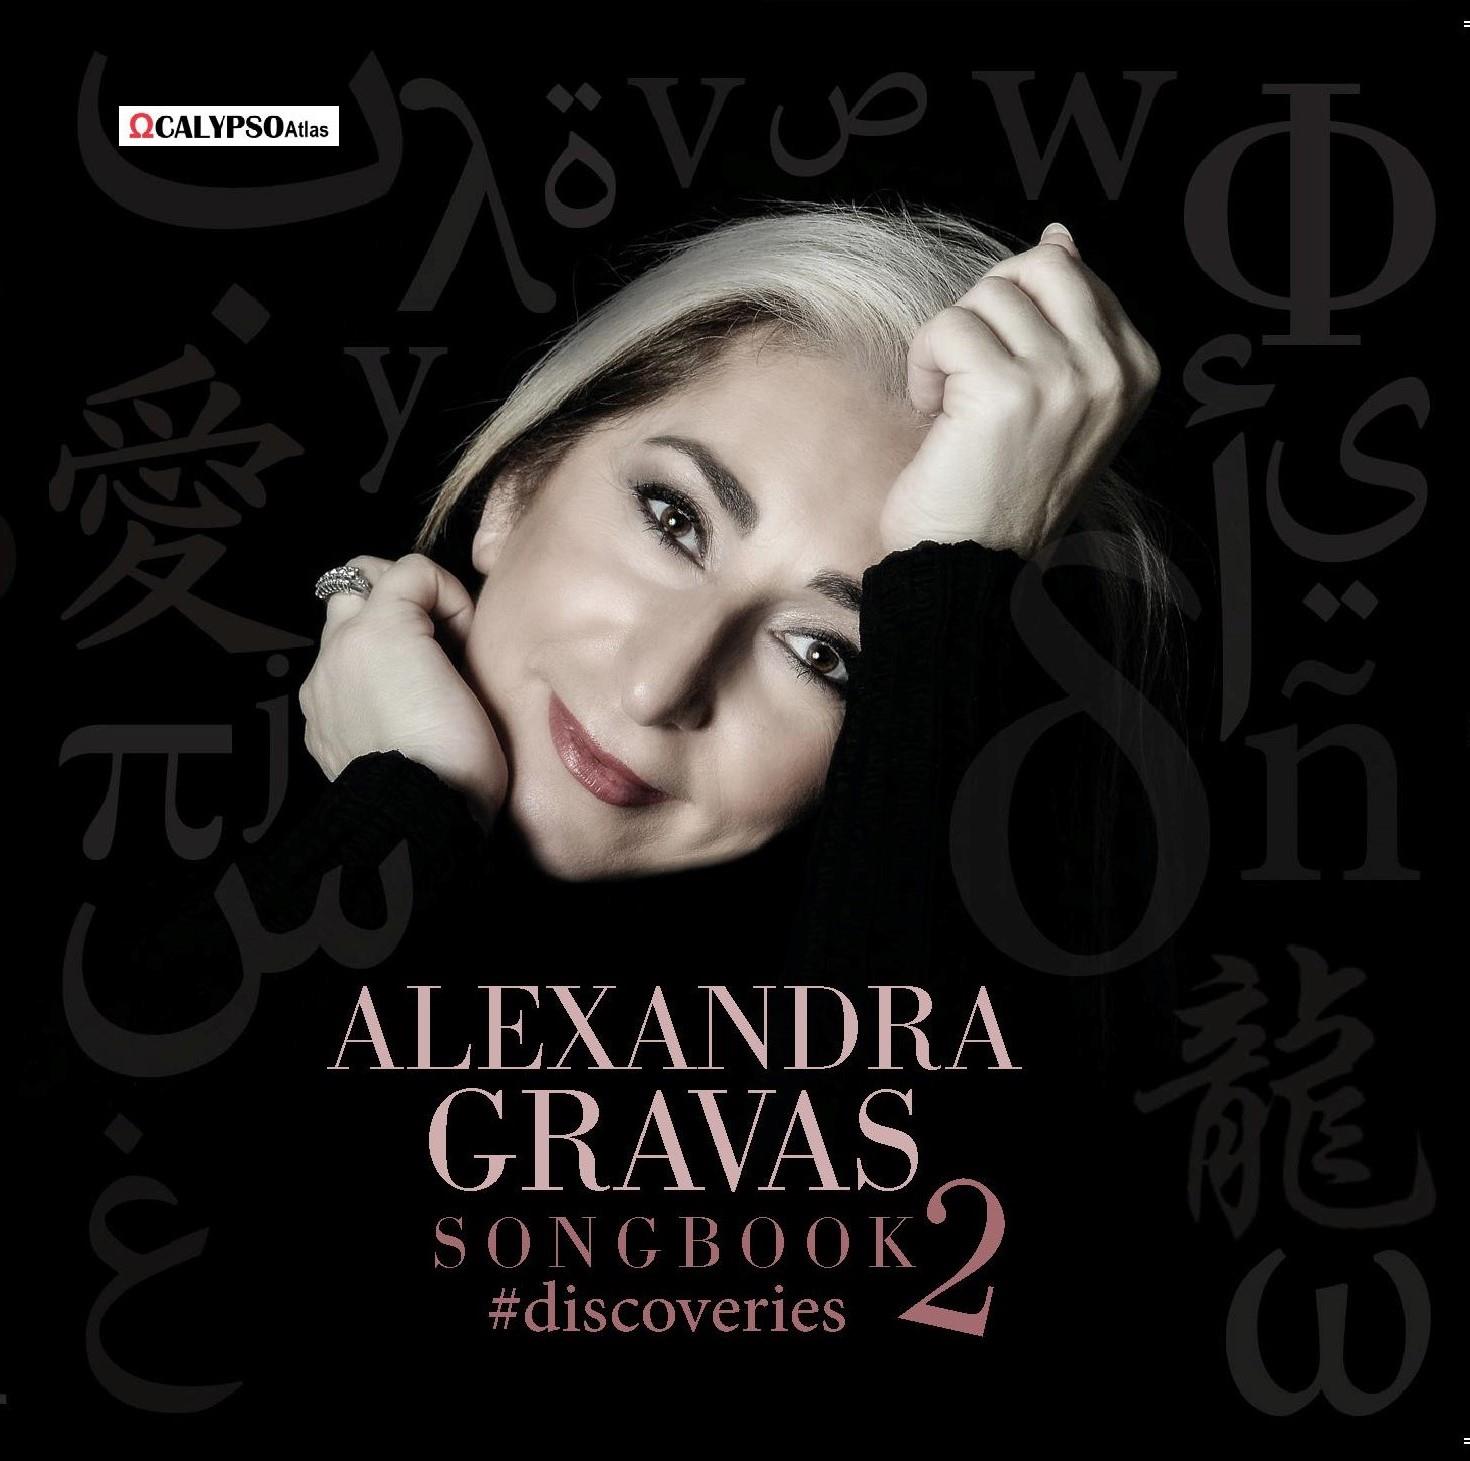 ALEXANDRA GRAVAS / SONGBOOK 2 DISCOVERIES - CD